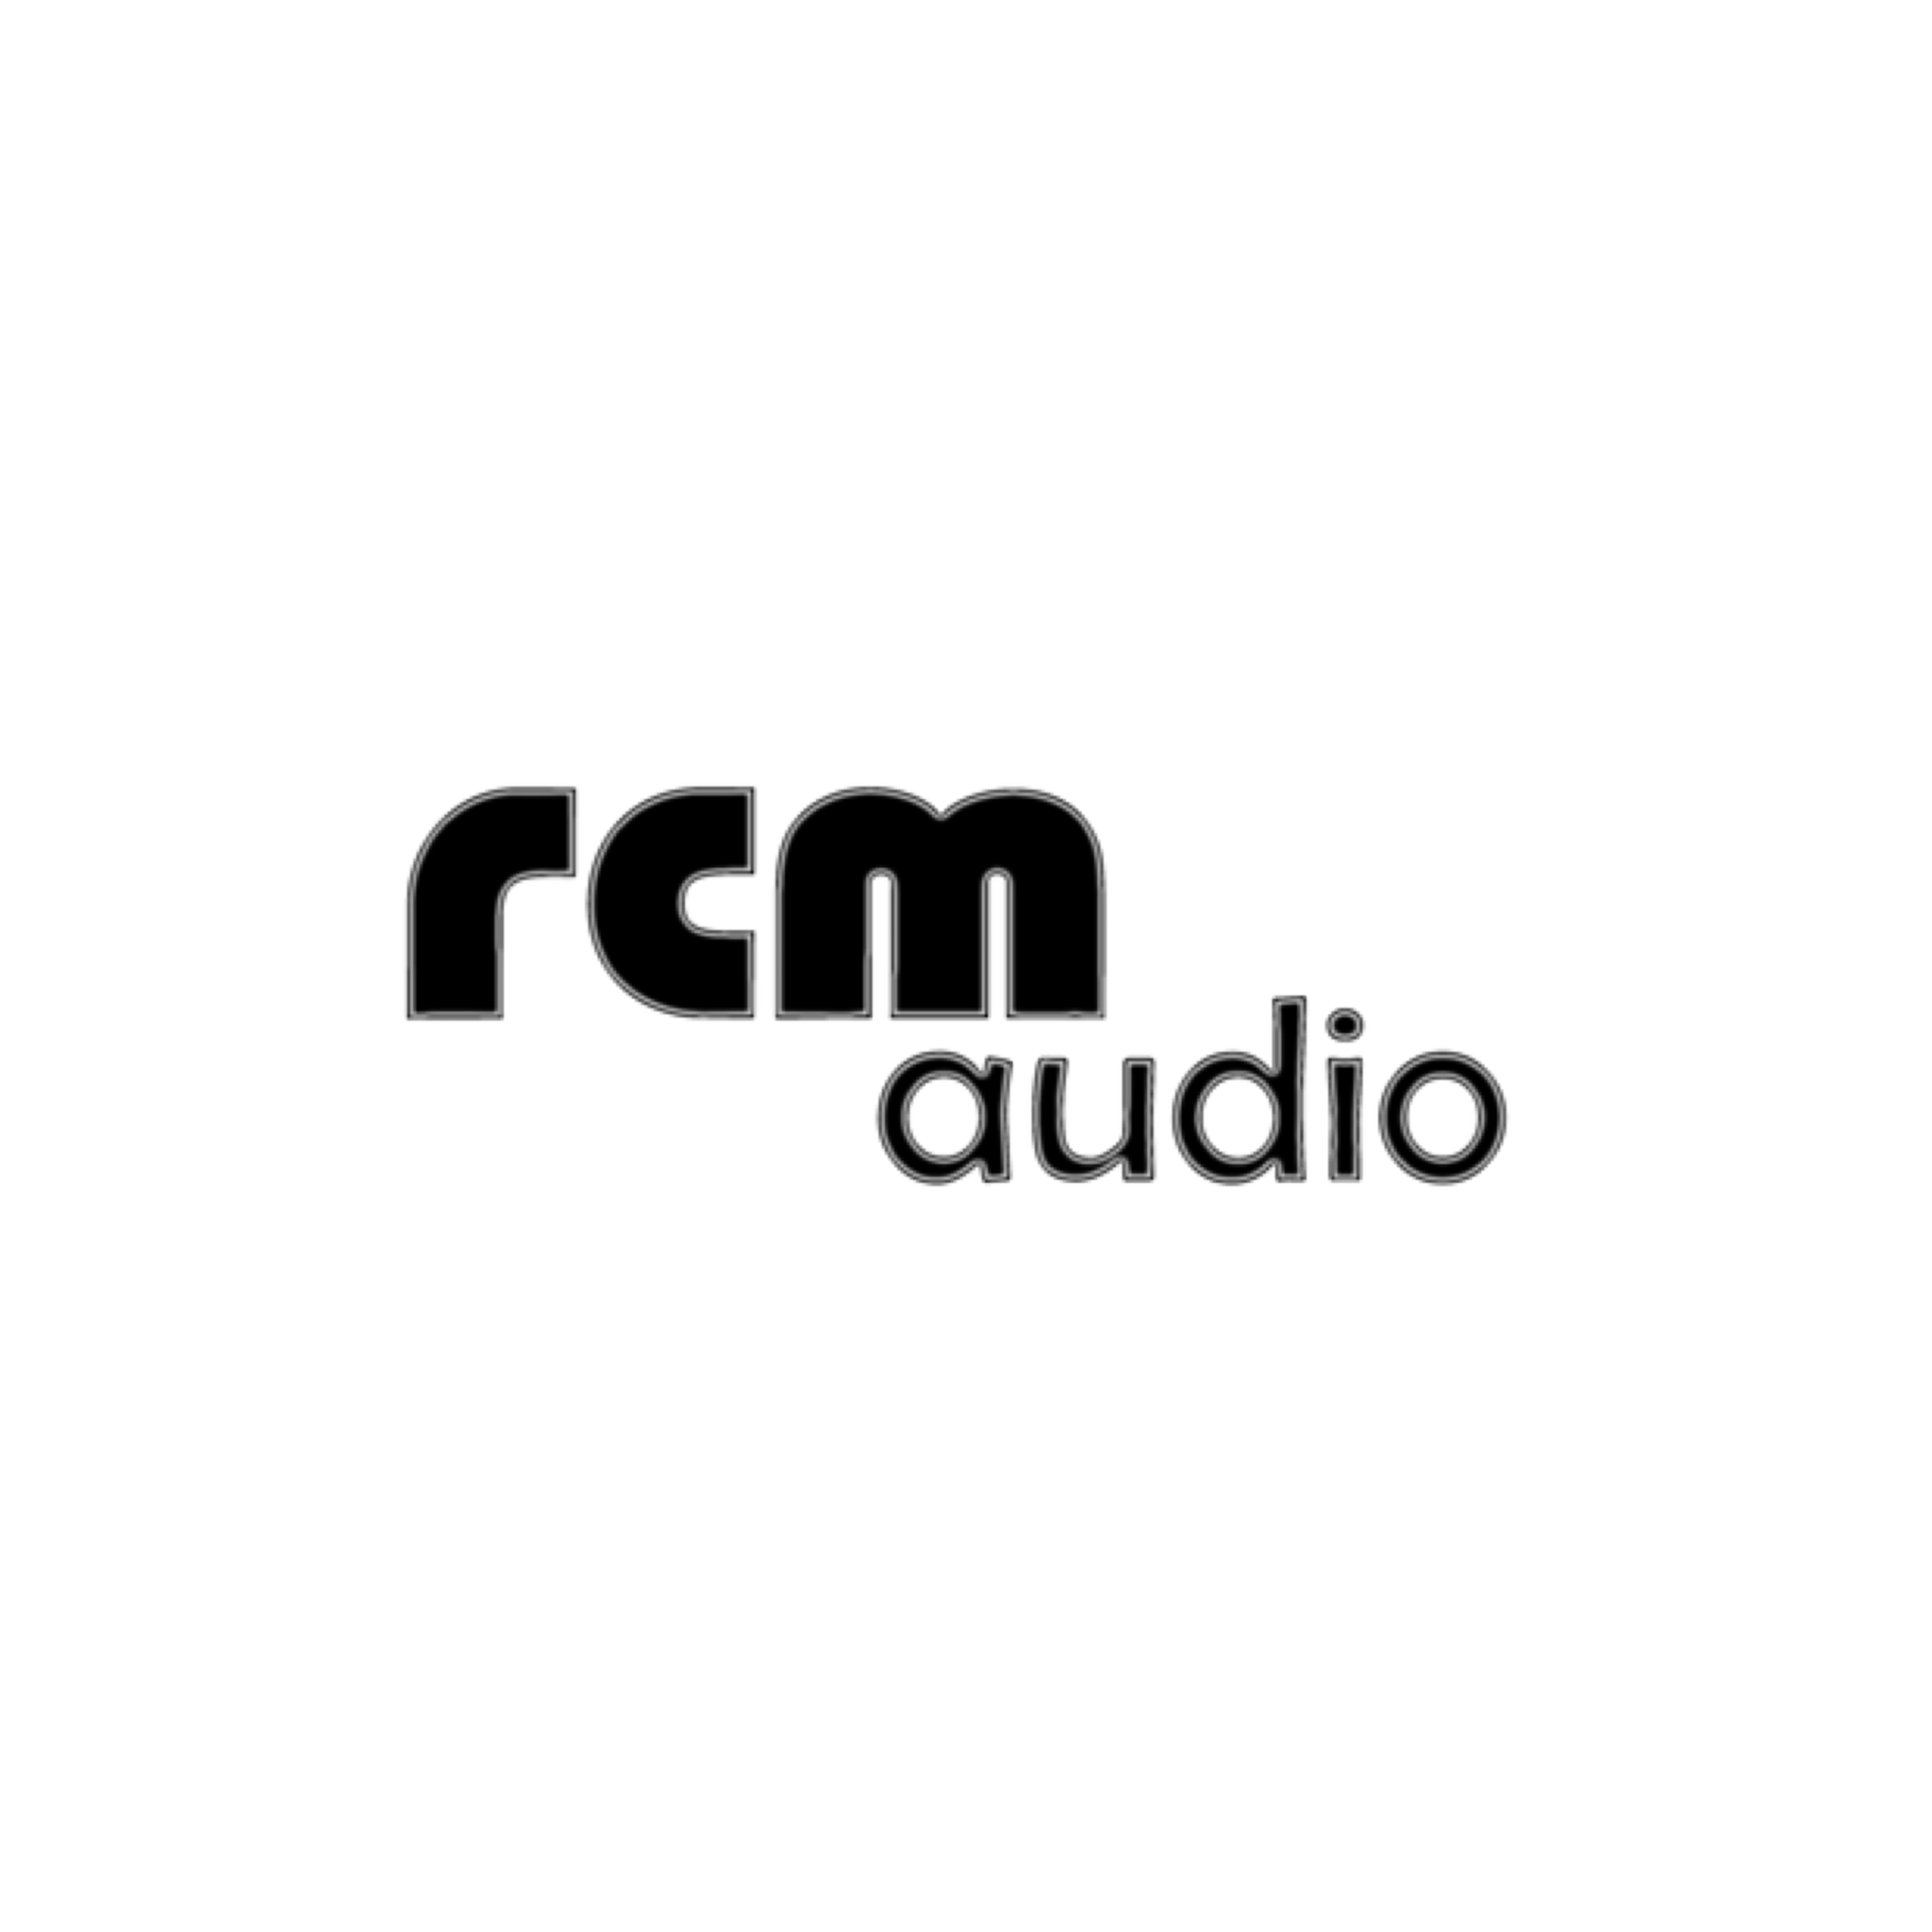 rcm audio logo